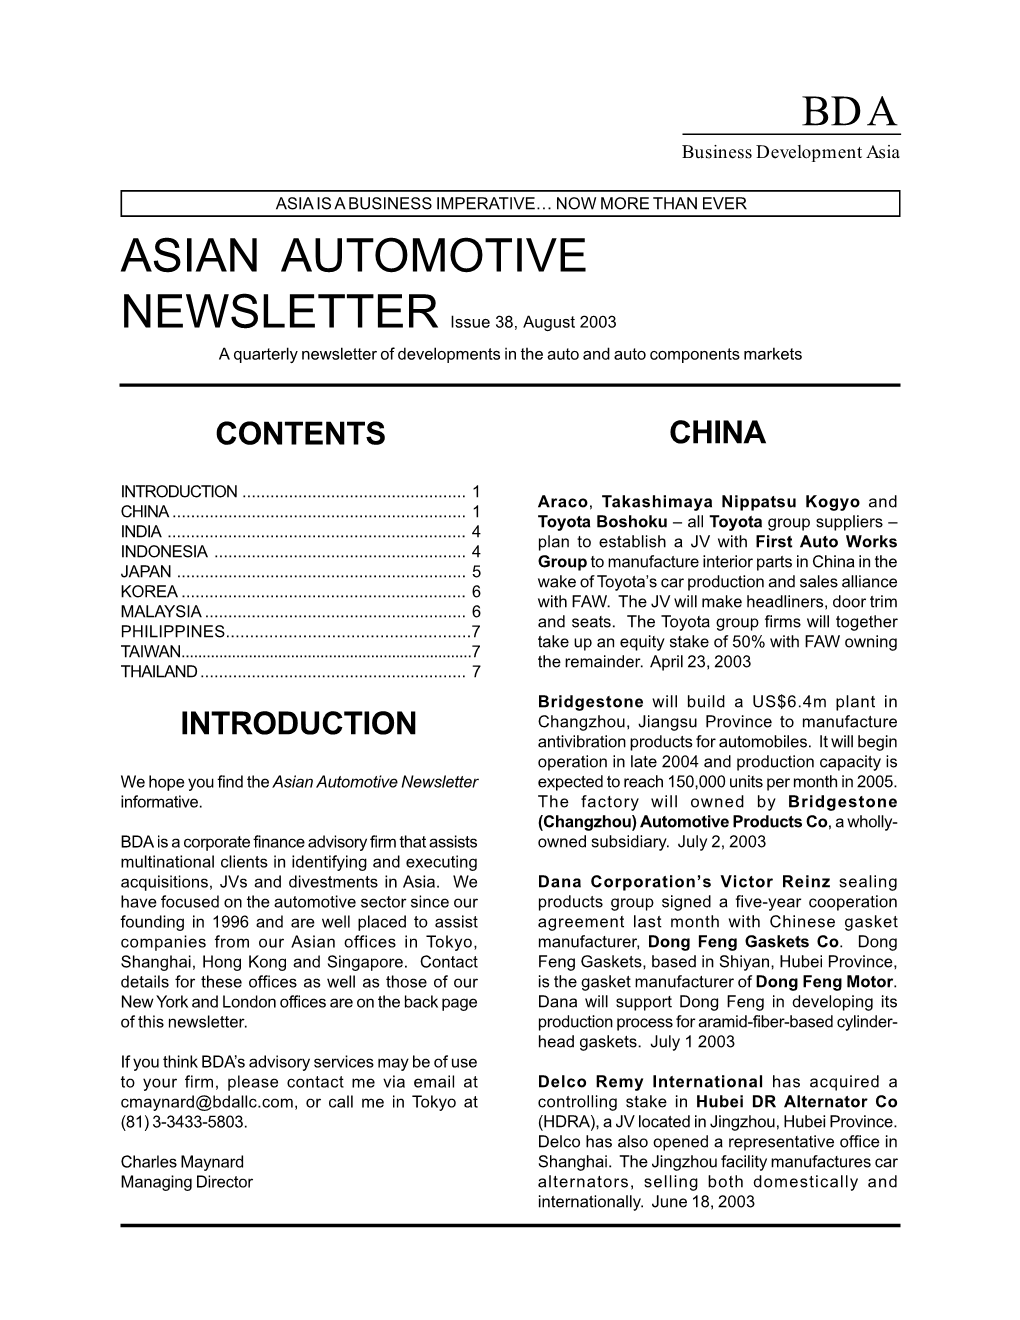 Asian Auto Newsletter April 2003